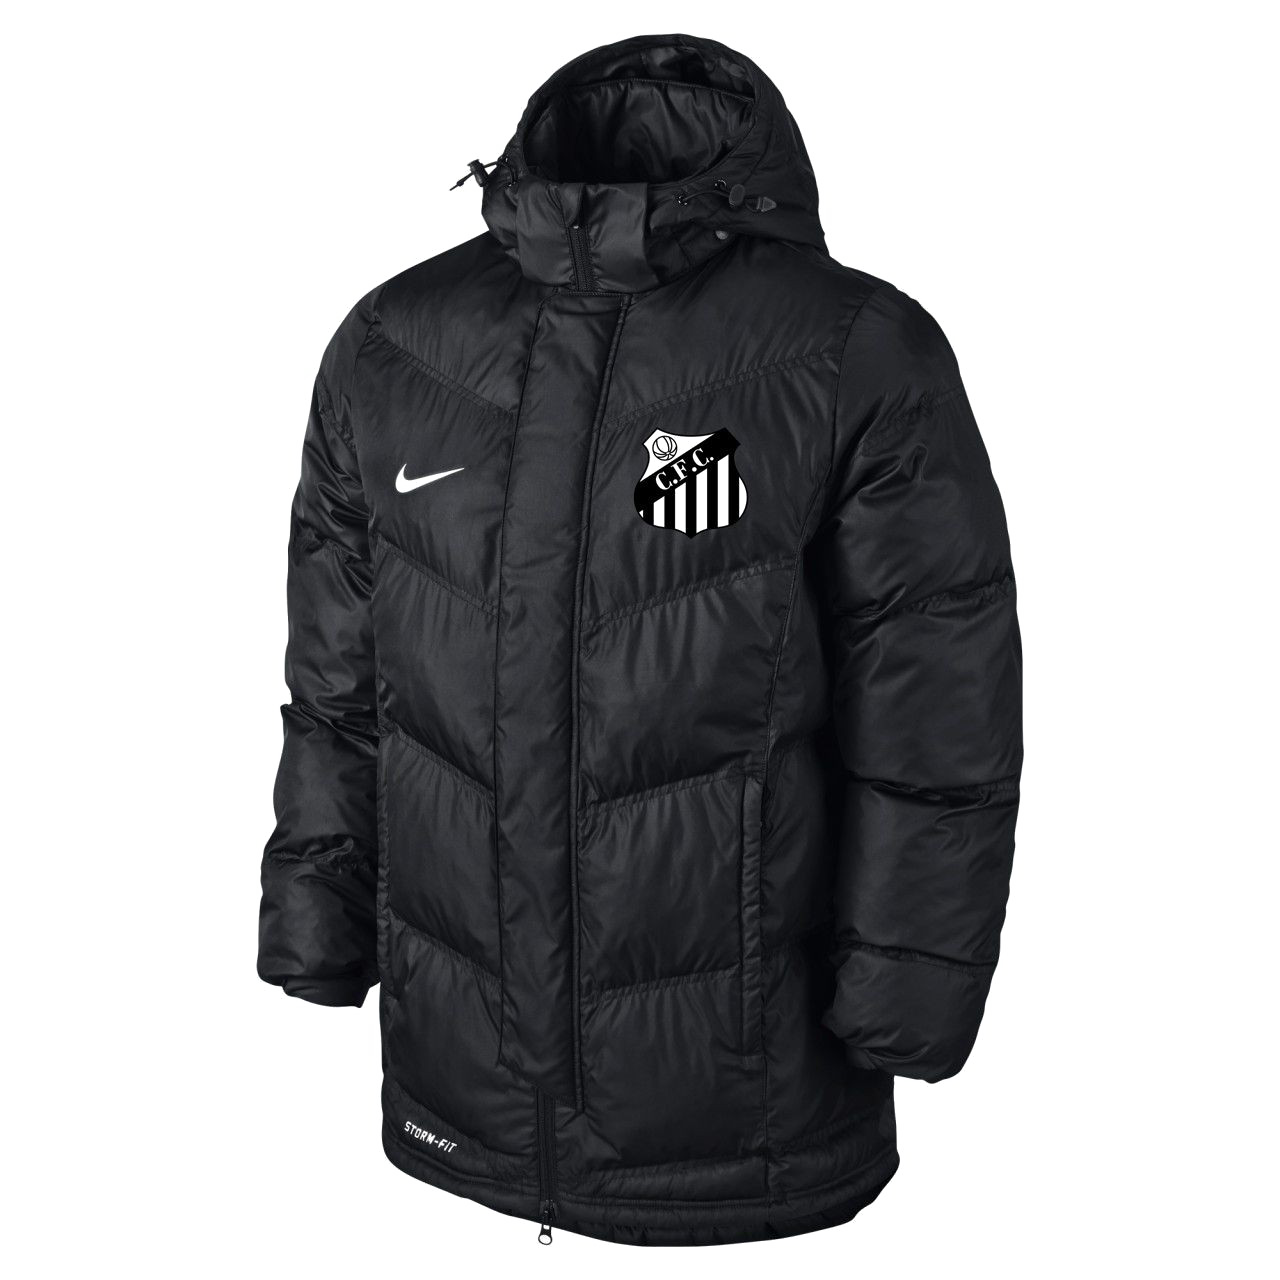 Black Winter Jacket For Women PNG Download Image